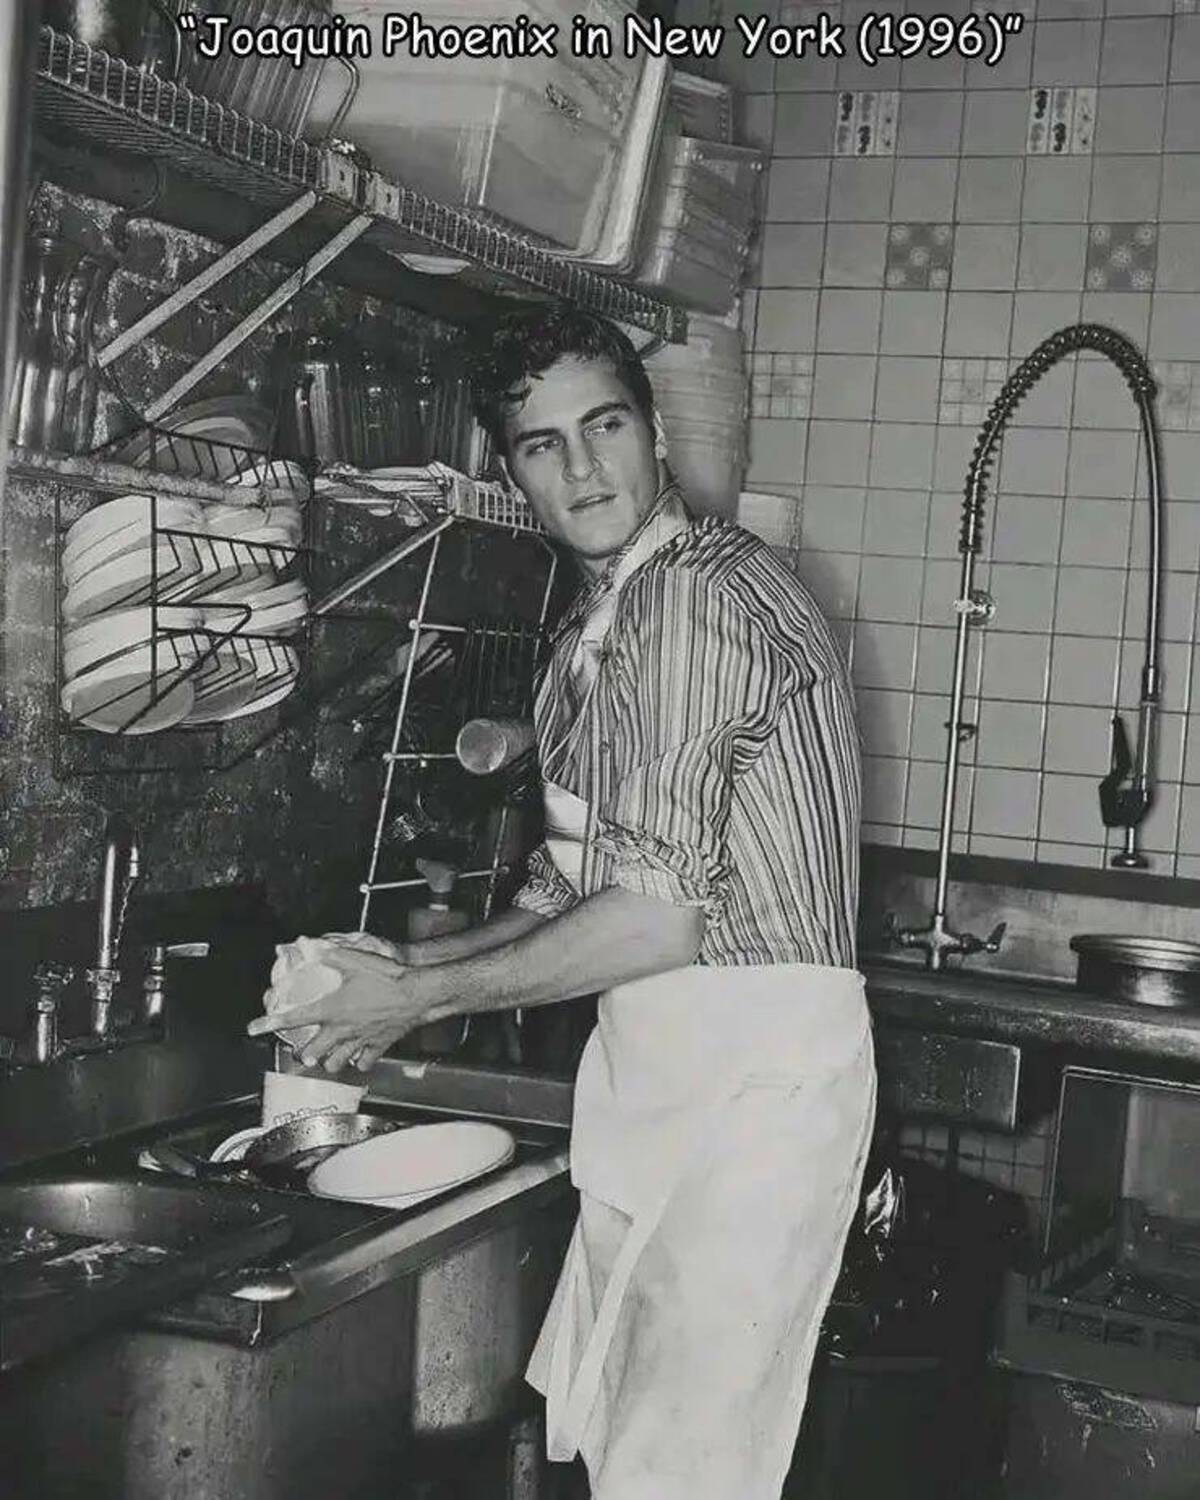 joaquin phoenix washing dishes - "Joaquin Phoenix in New York 1996"